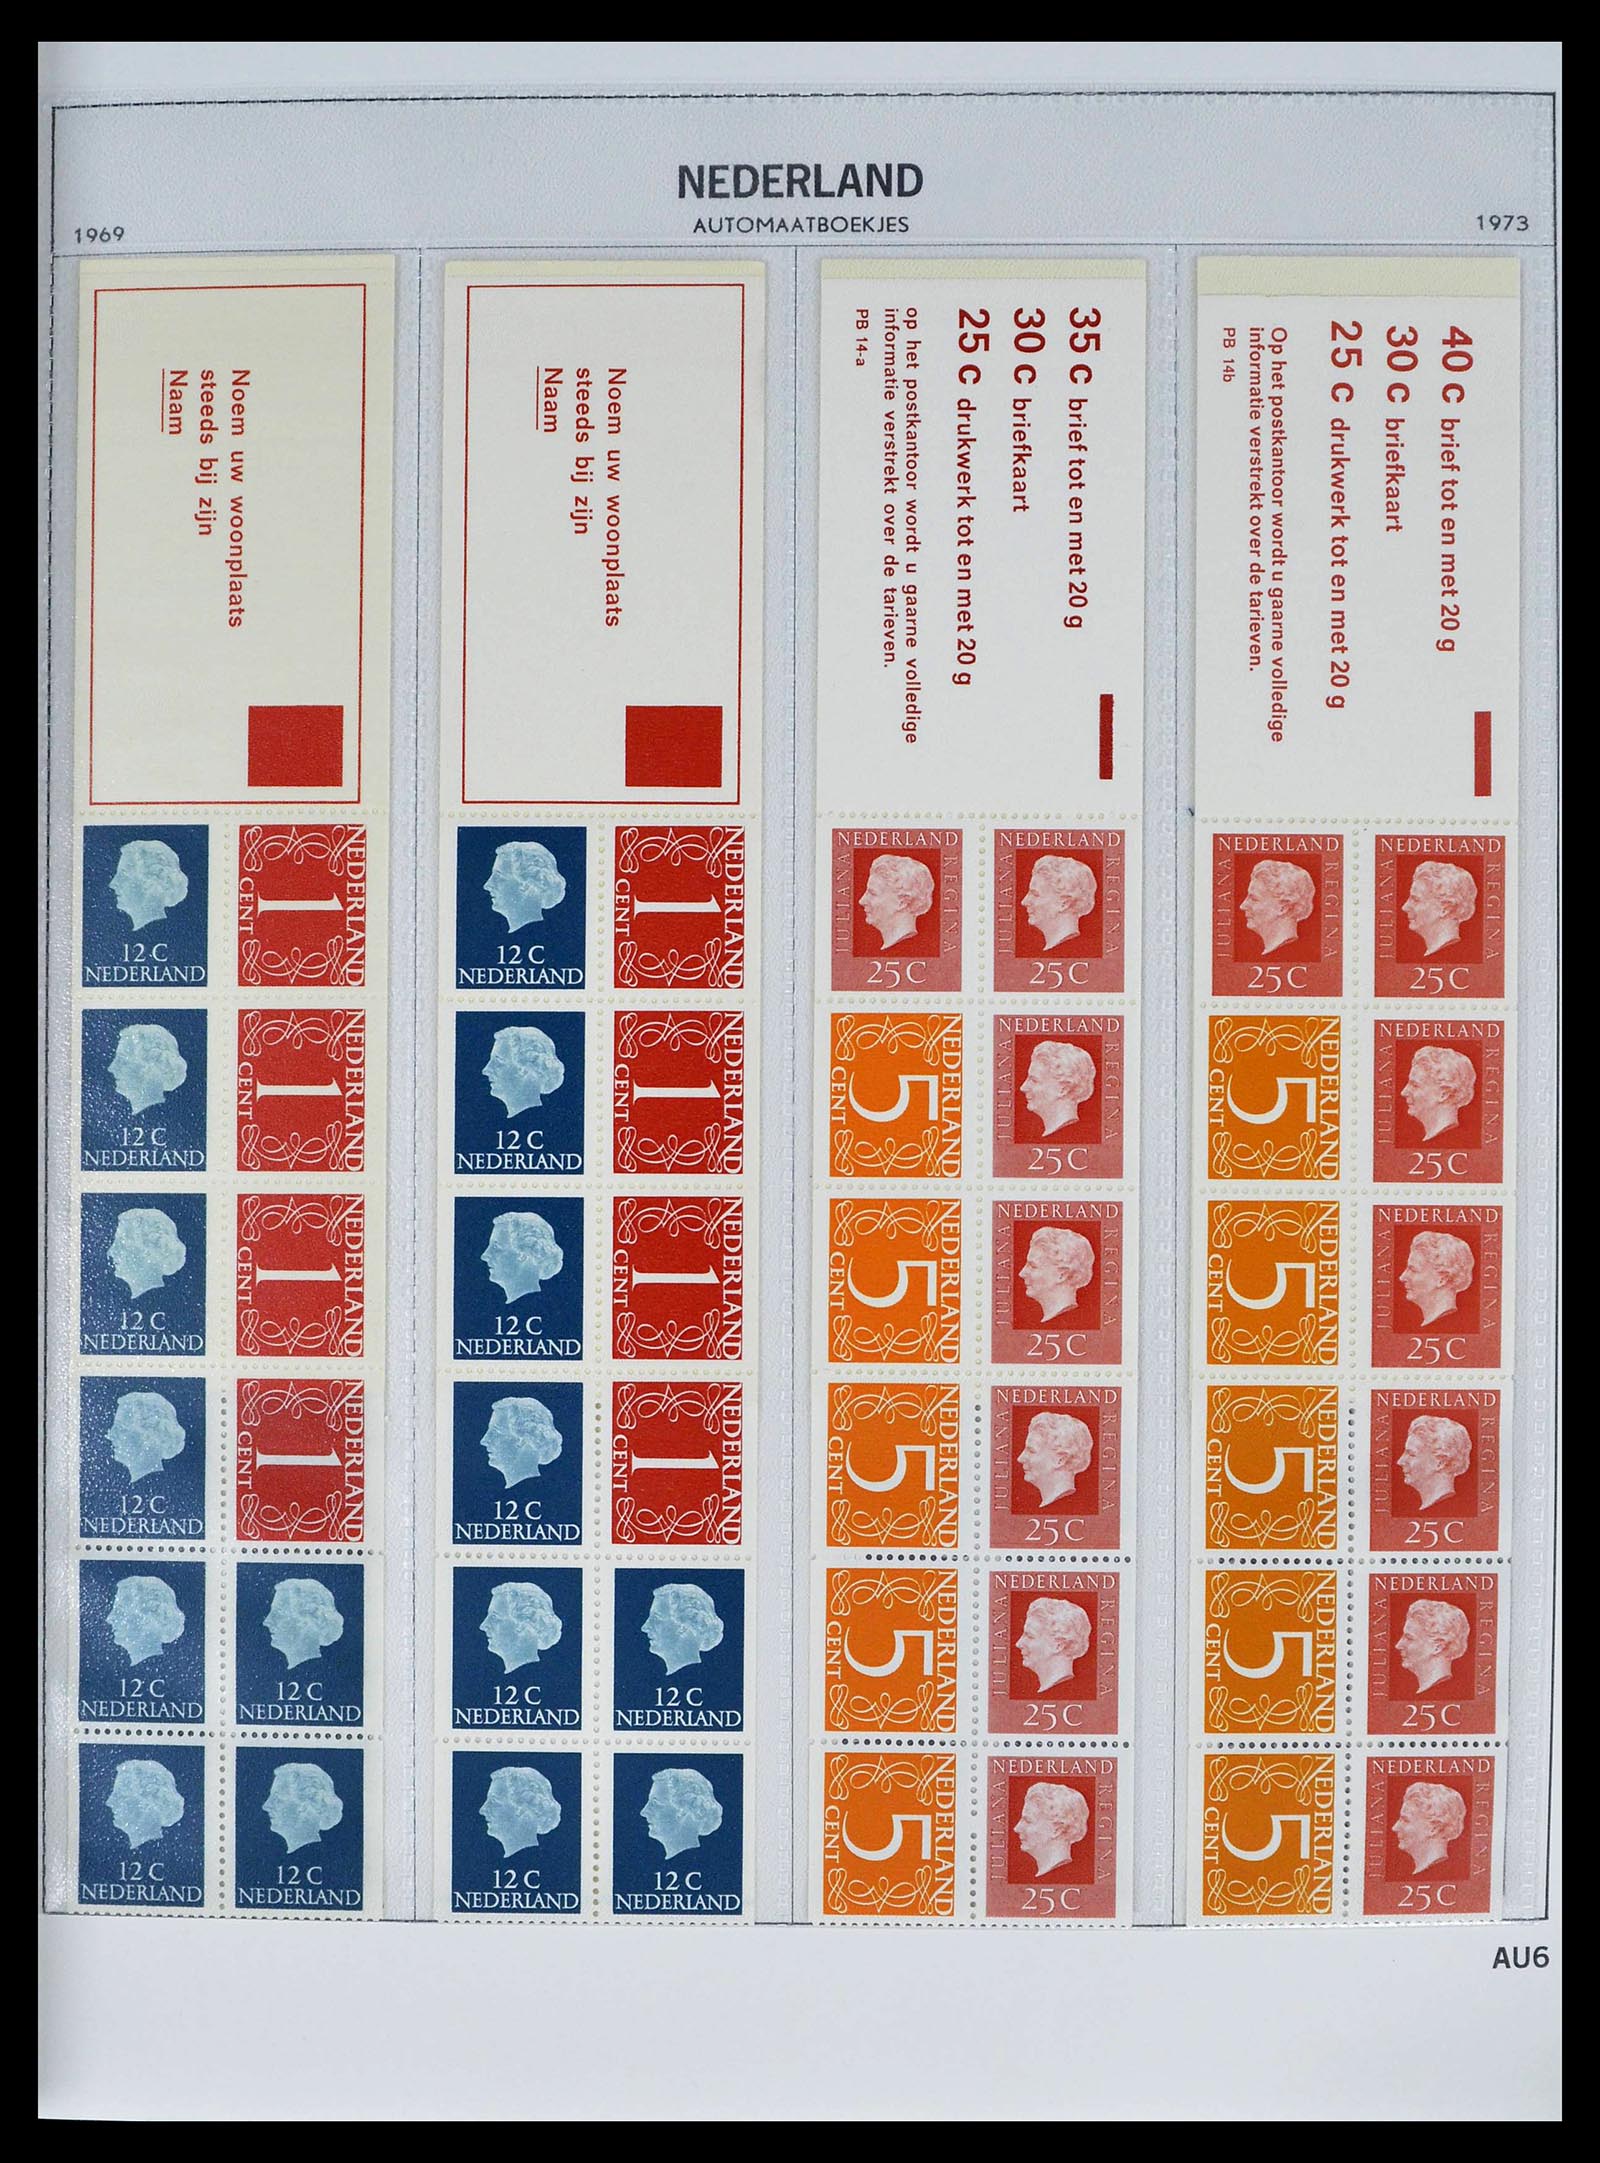 39362 0006 - Stamp collection 39362 Netherlands stamp booklets 1964-2003.